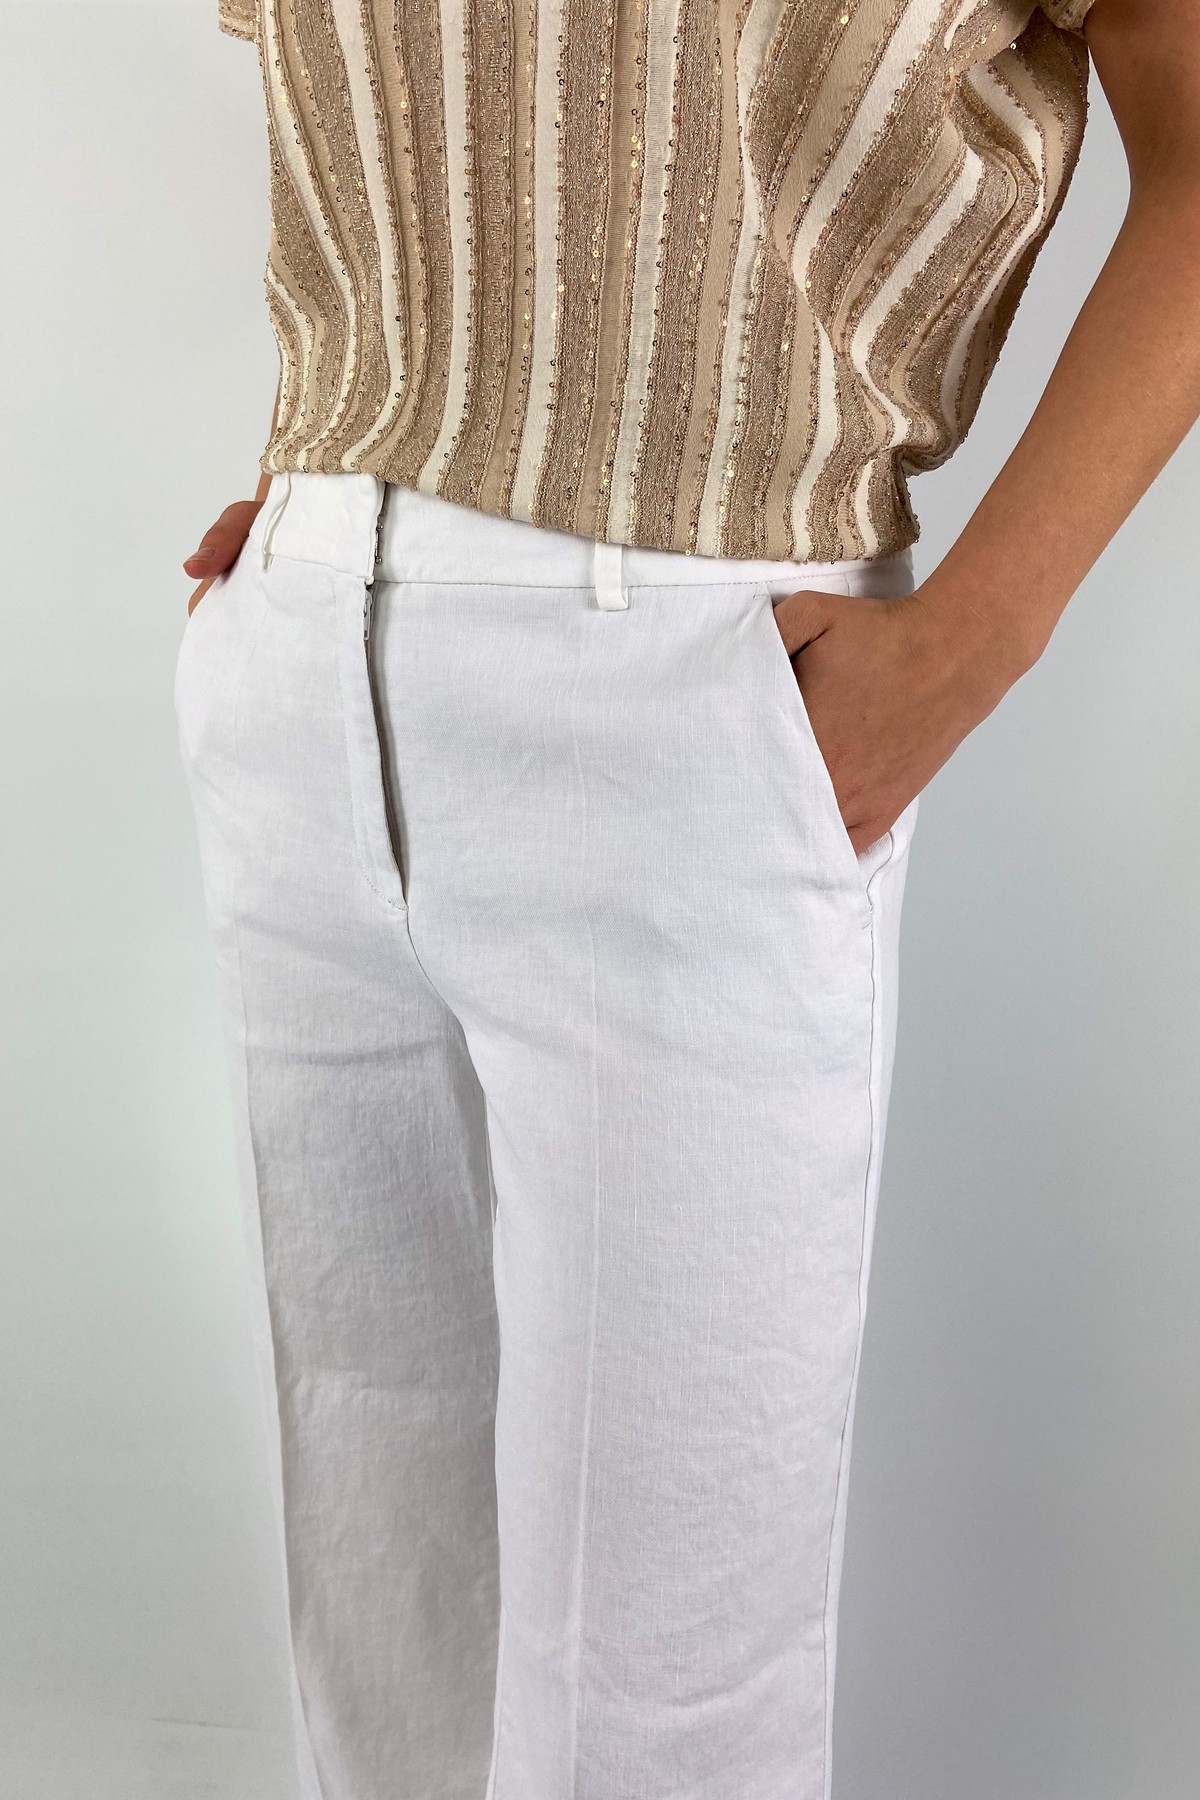 Cambio broek culotte - California summer linnen - wit - uitverkocht